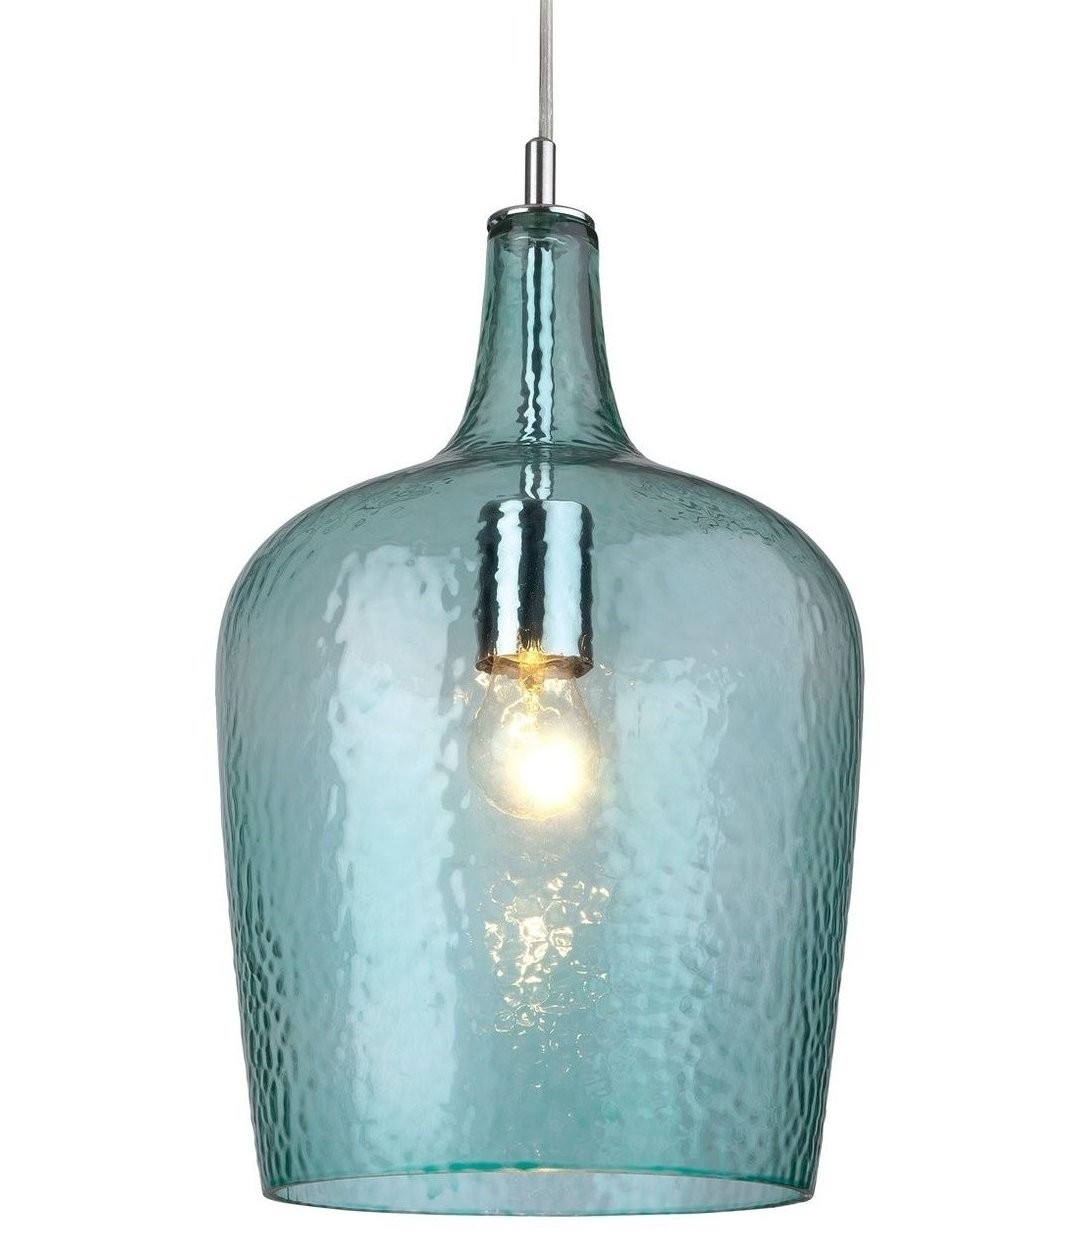 Aqua glass pendant firstlight lighting